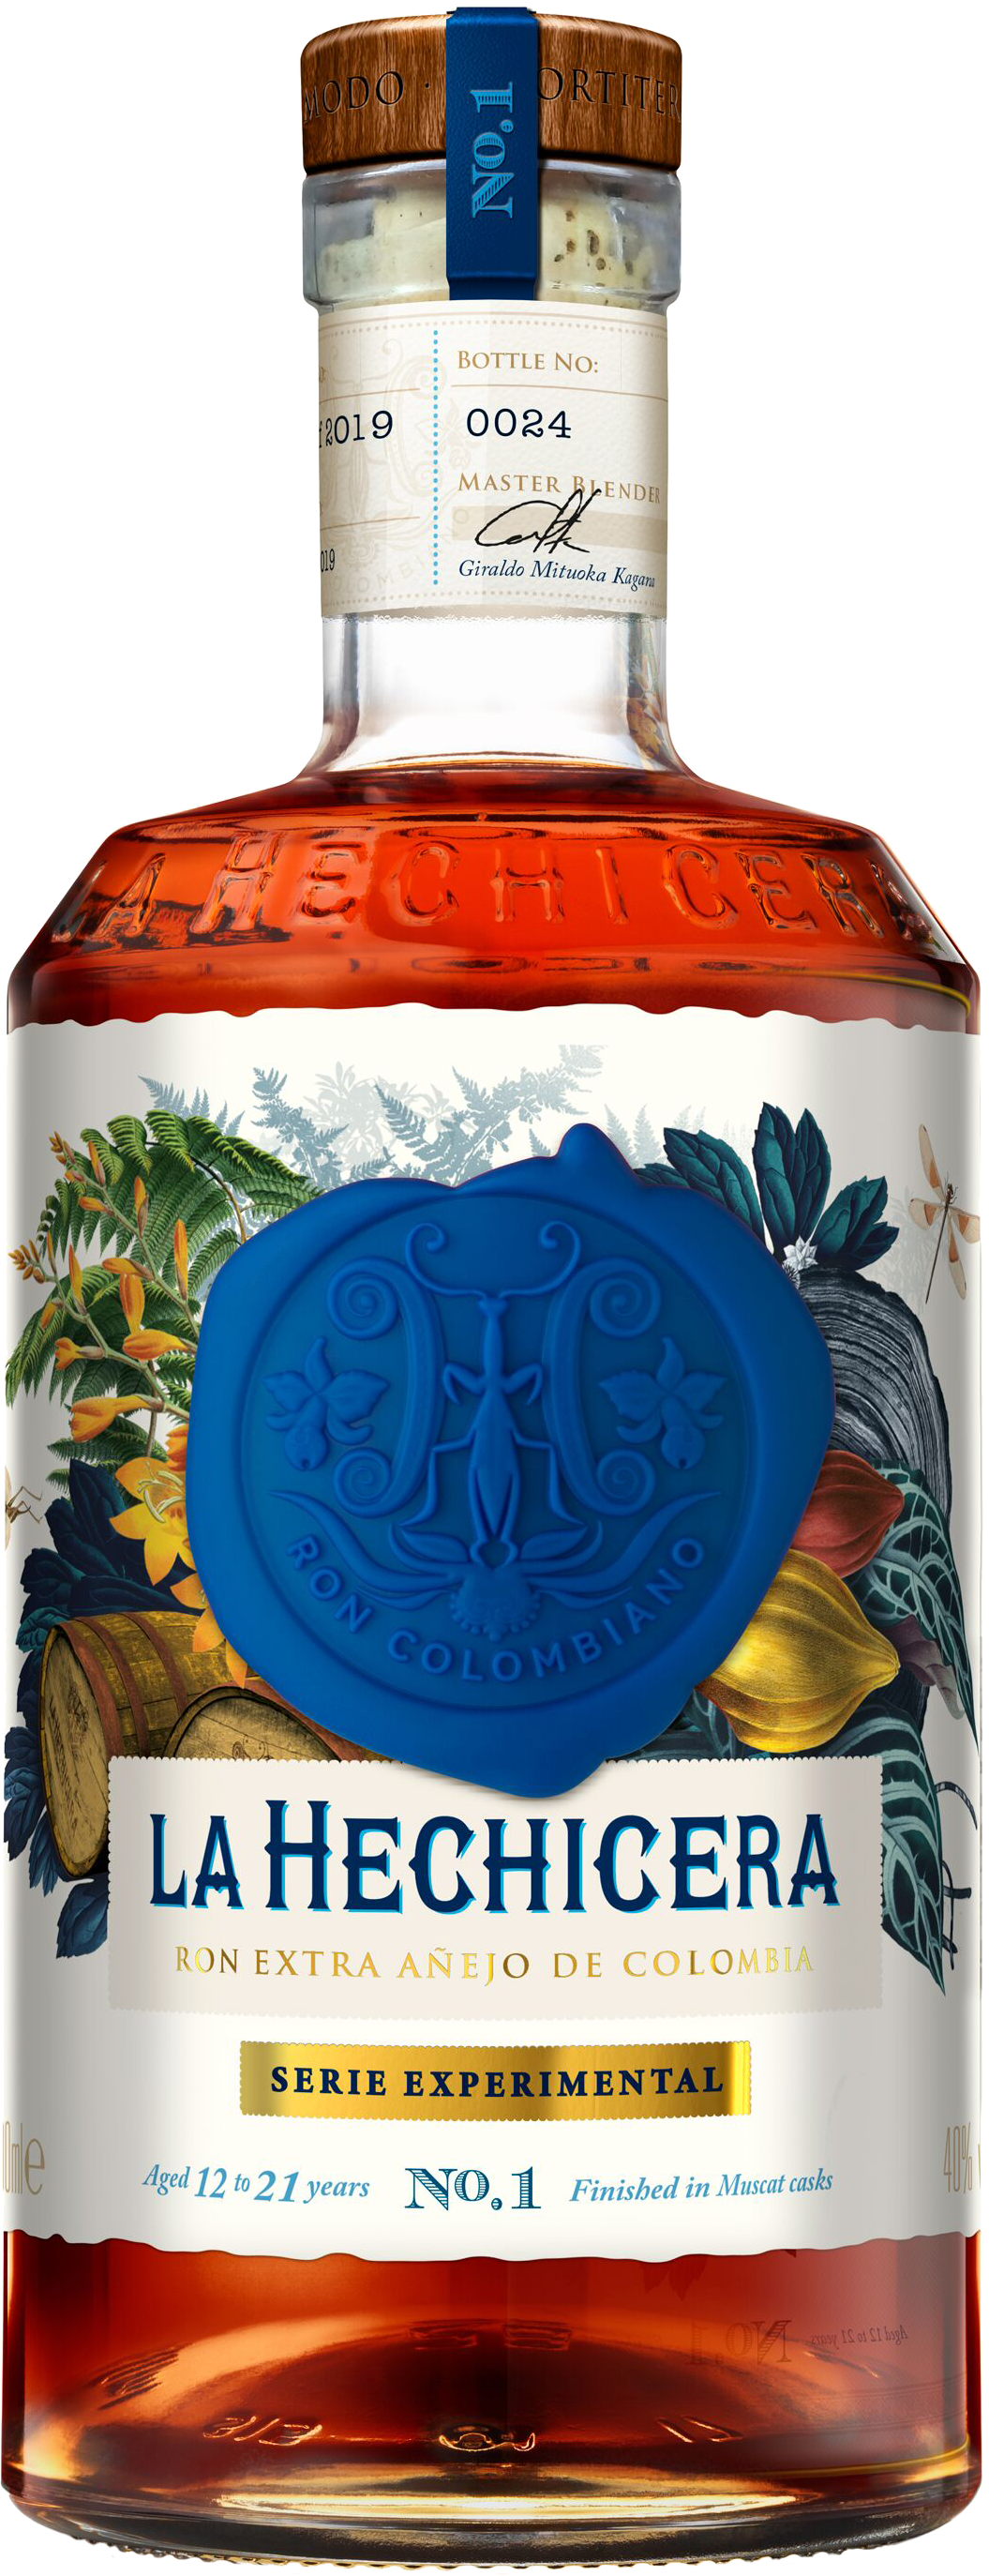 La Hechicera Rum Serie Experimental No.1 43% 0,7l